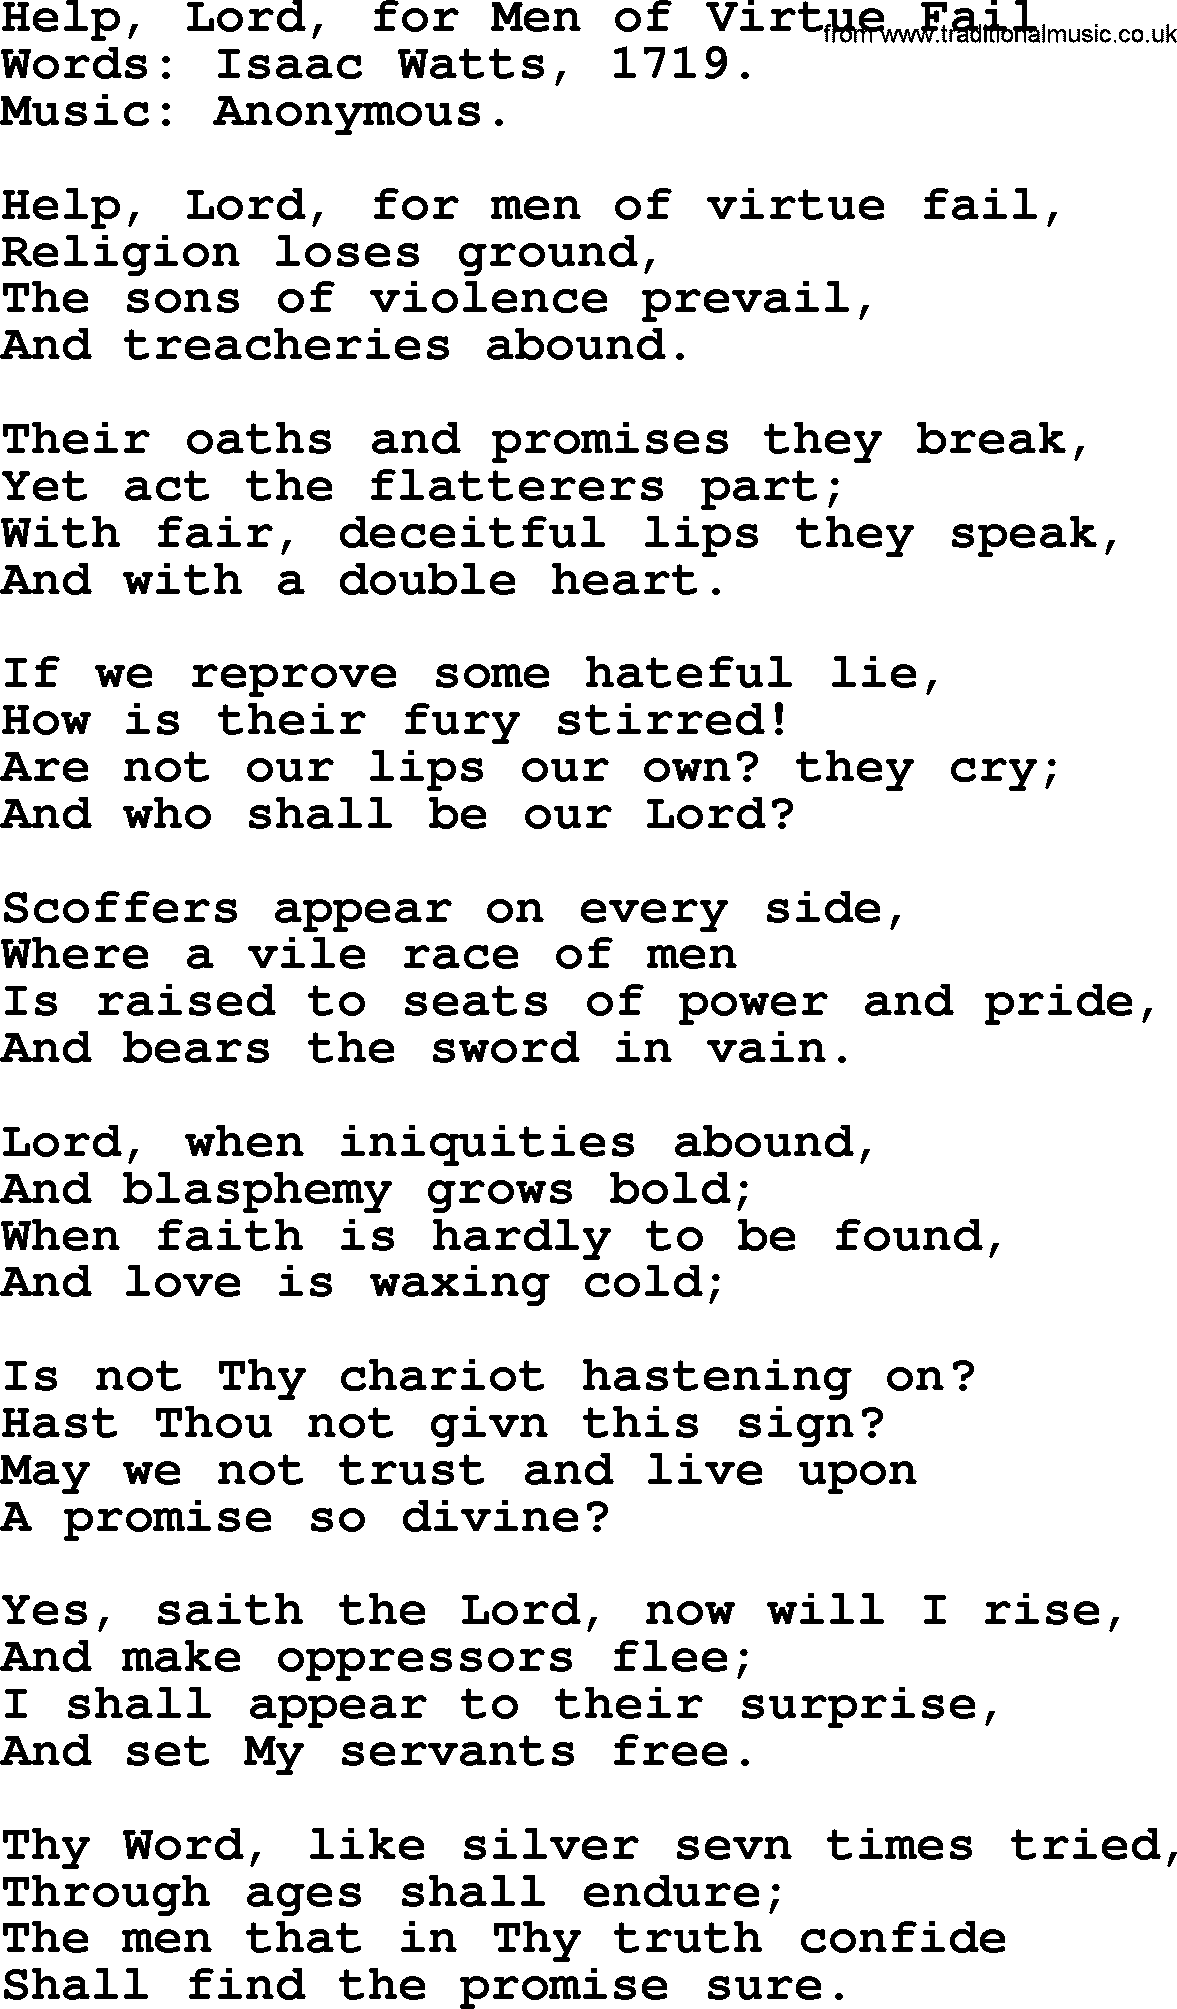 Isaac Watts Christian hymn: Help, Lord, for Men of Virtue Fail- lyricss